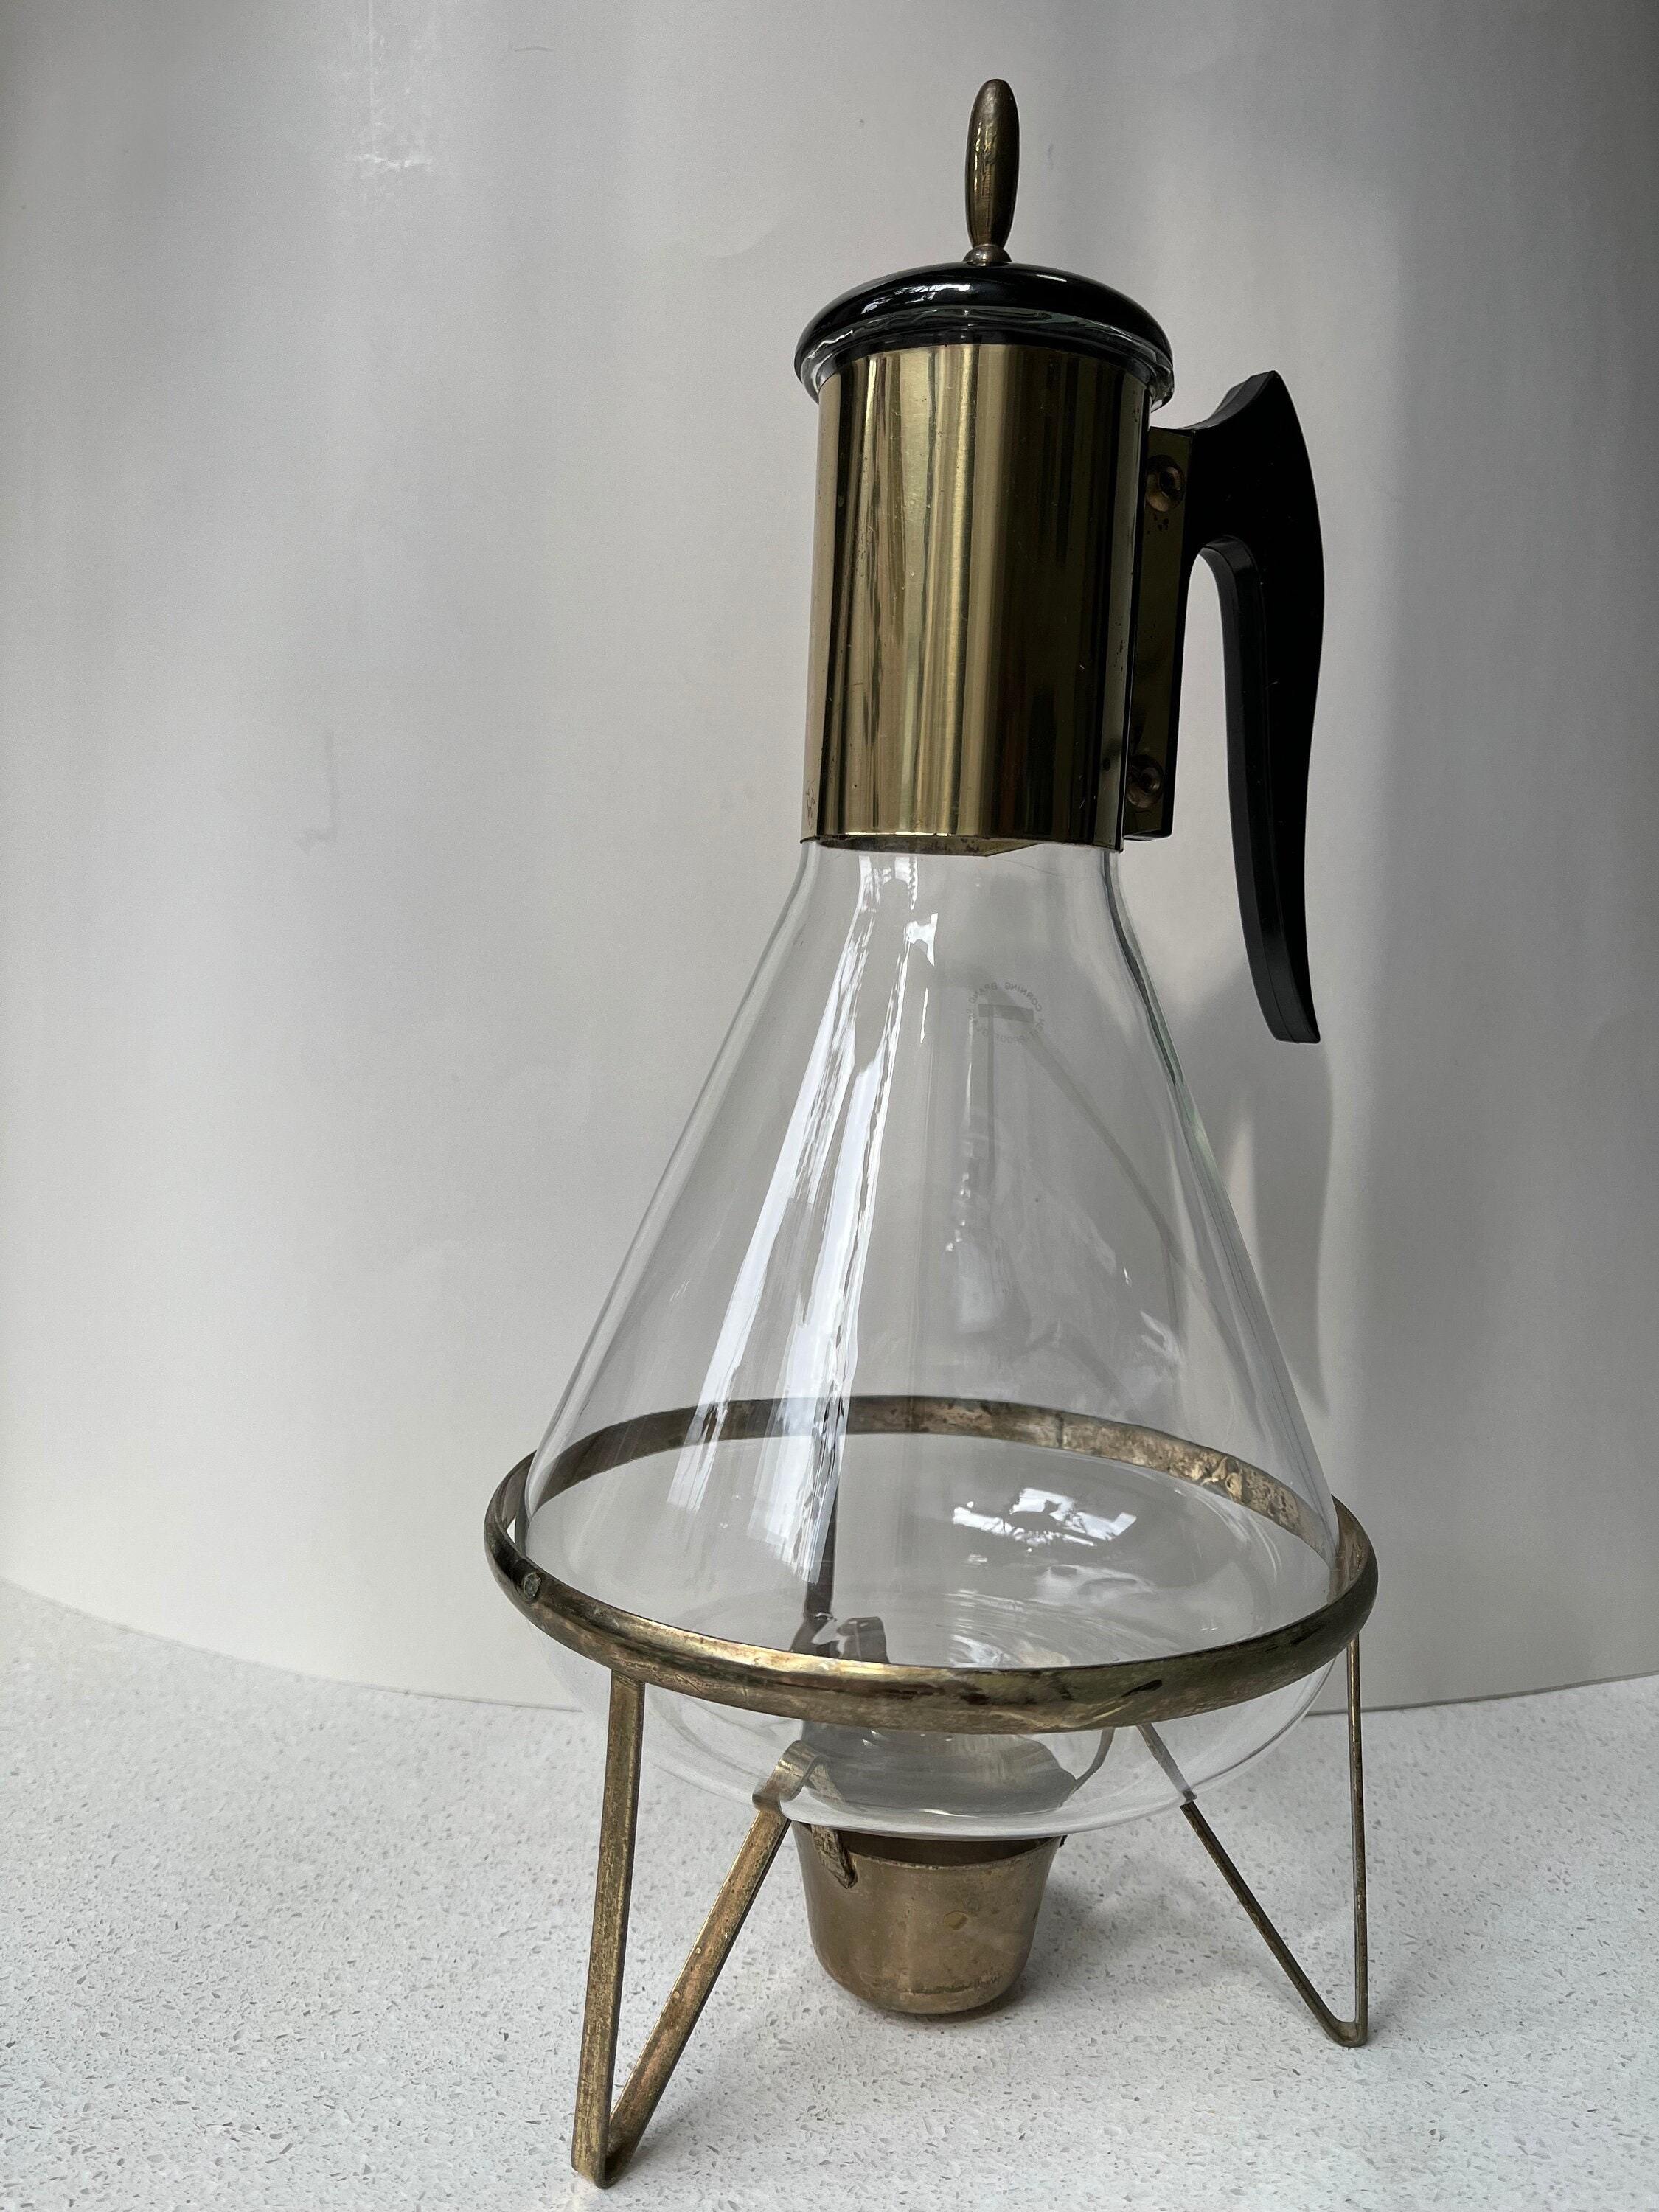 Pyrex MCM Mid Century Modern Coffee Pot 8 Cup Carafe Warmer Glass Vintage  EUC